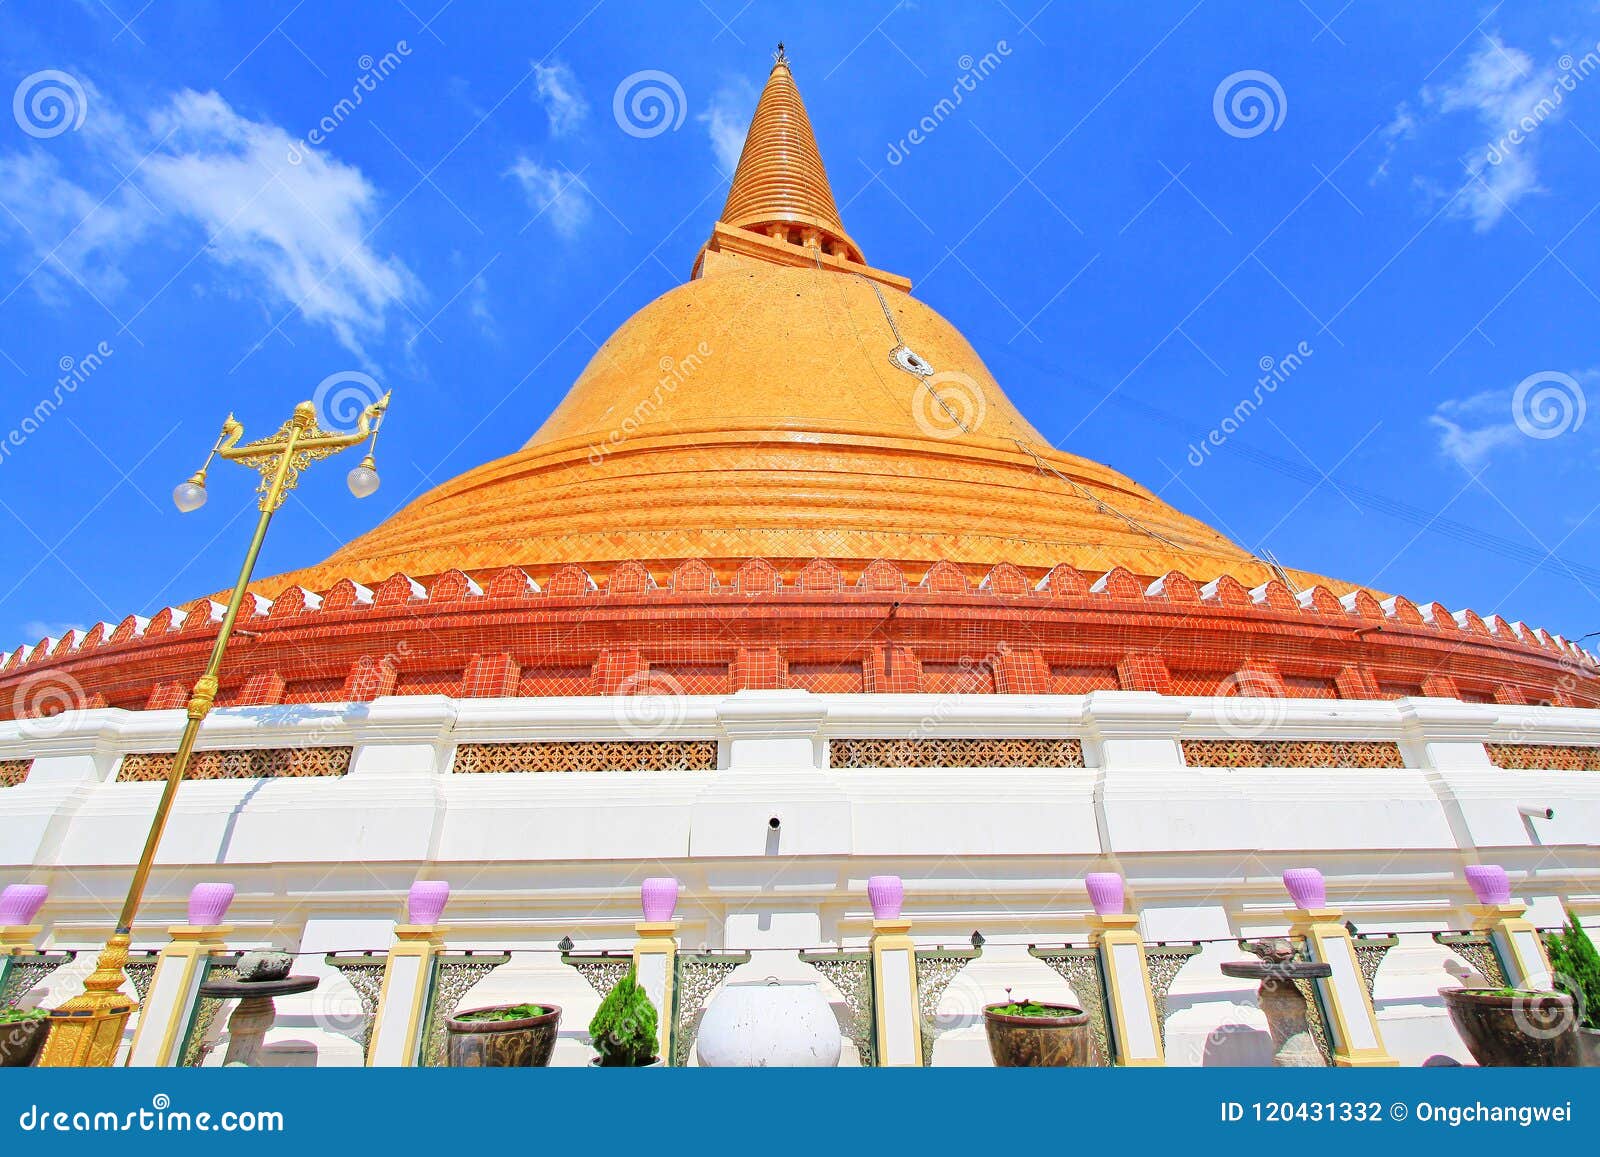 Phra Pathom Chedi Nakhon Pathom Thailand Stock Photo Image Of Landmarks Nakhon